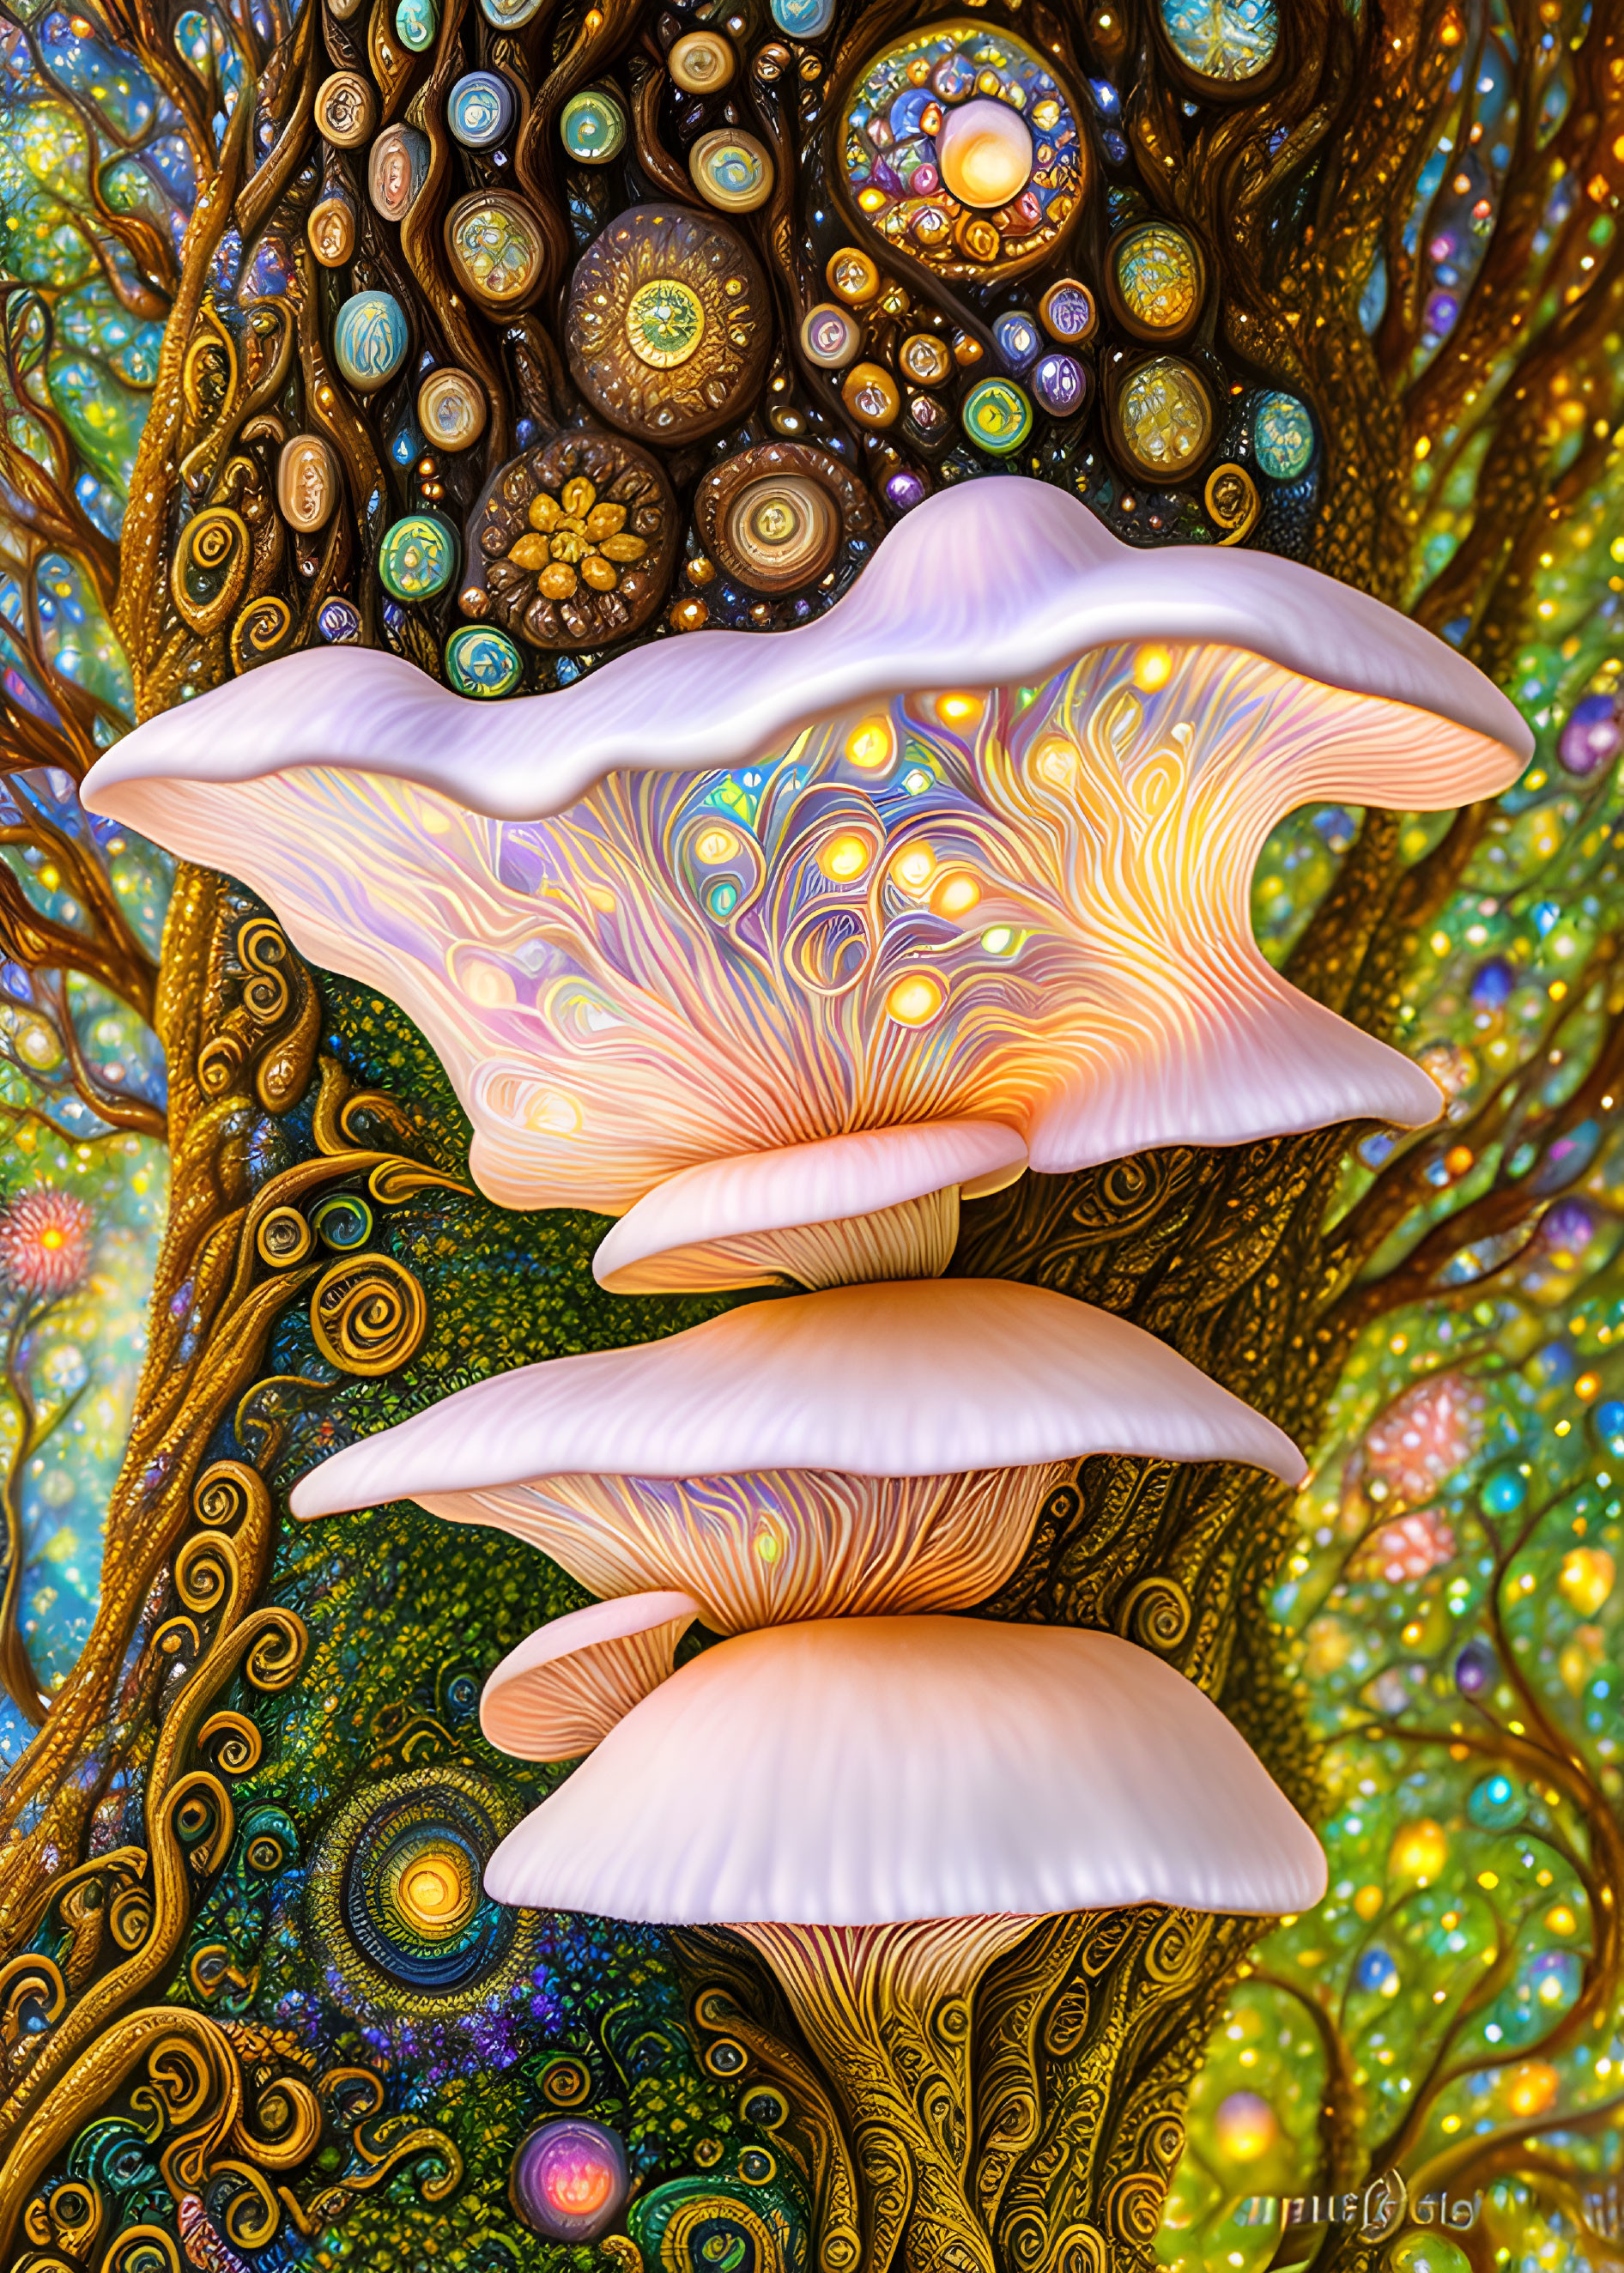 Mushroom psychedelic